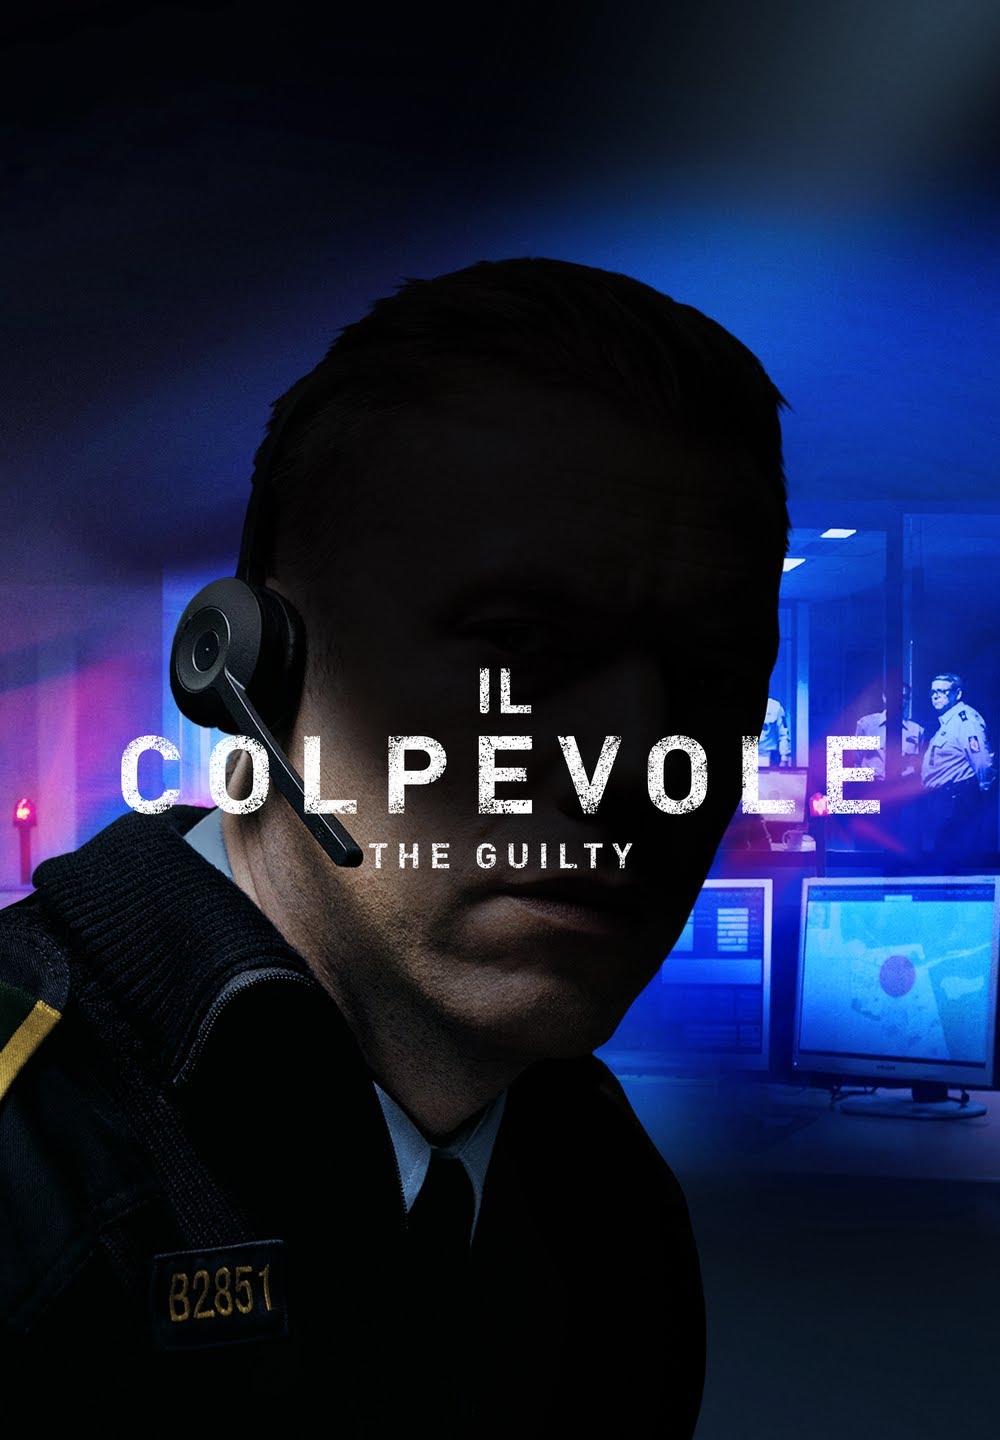 Il colpevole – The Guilty [HD] (2019)